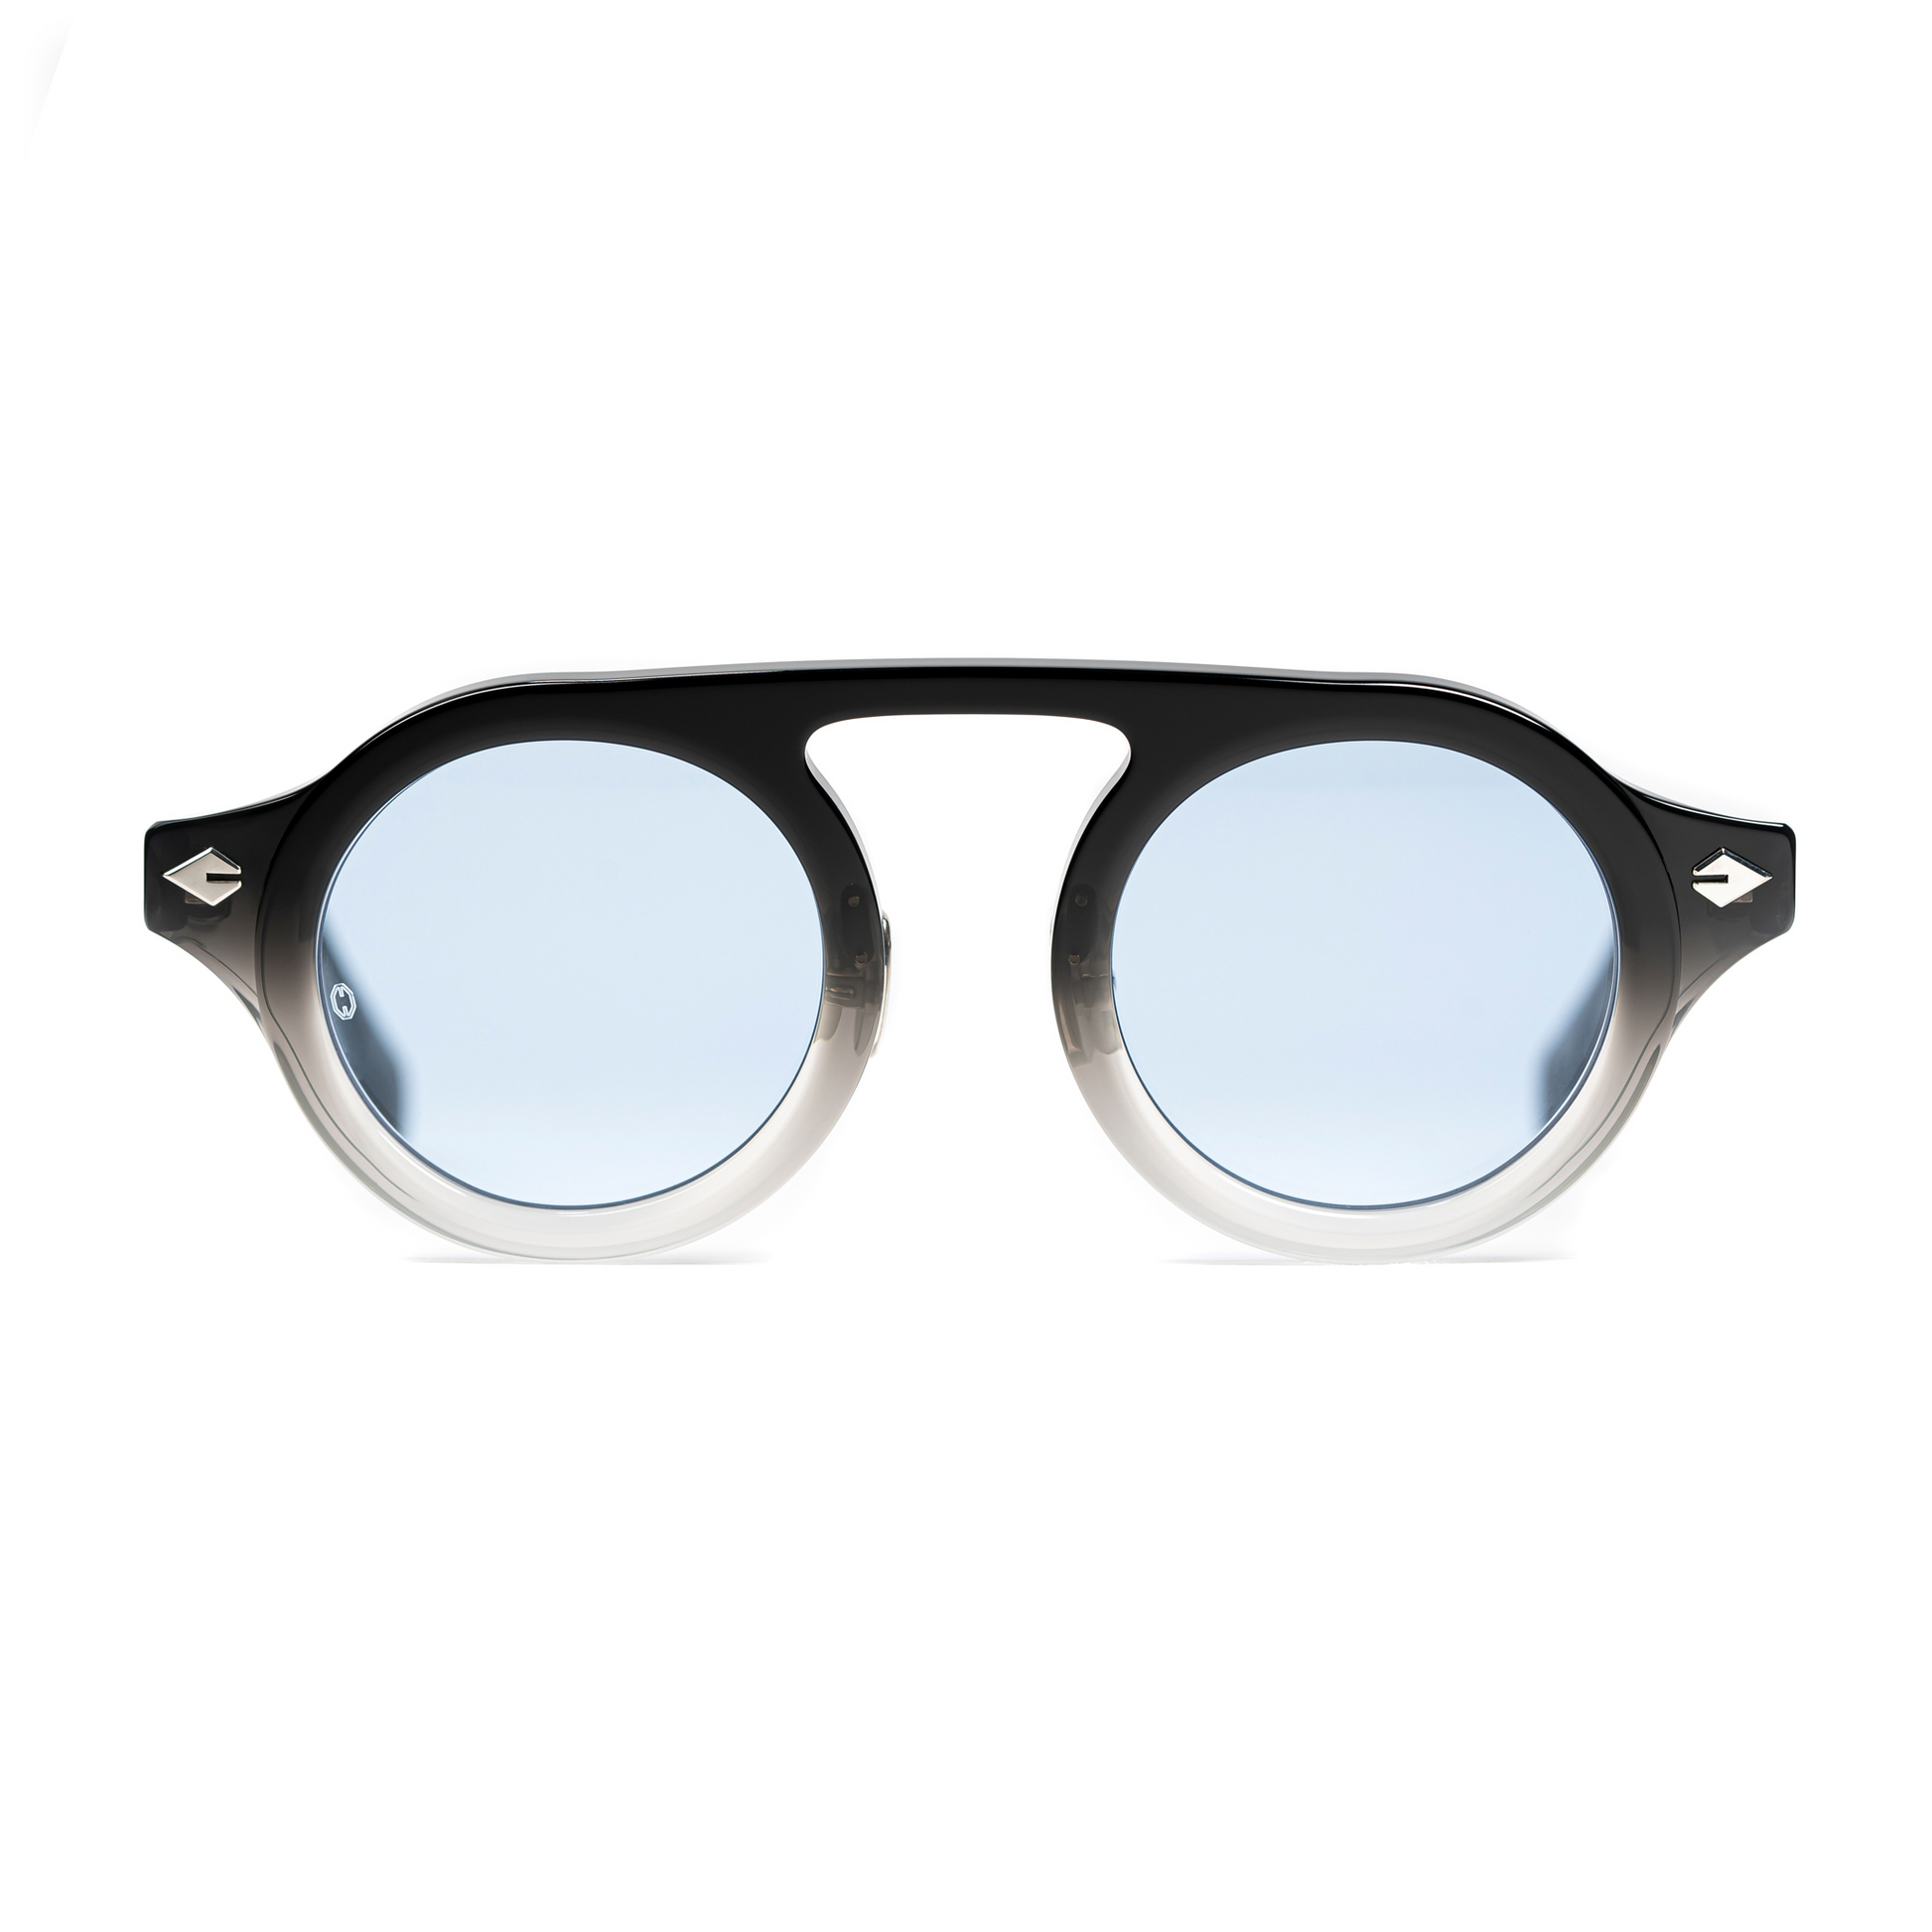 Buy T Henri E2 | Sunglasses Frame | Authorized Dealer Adair Eyewear